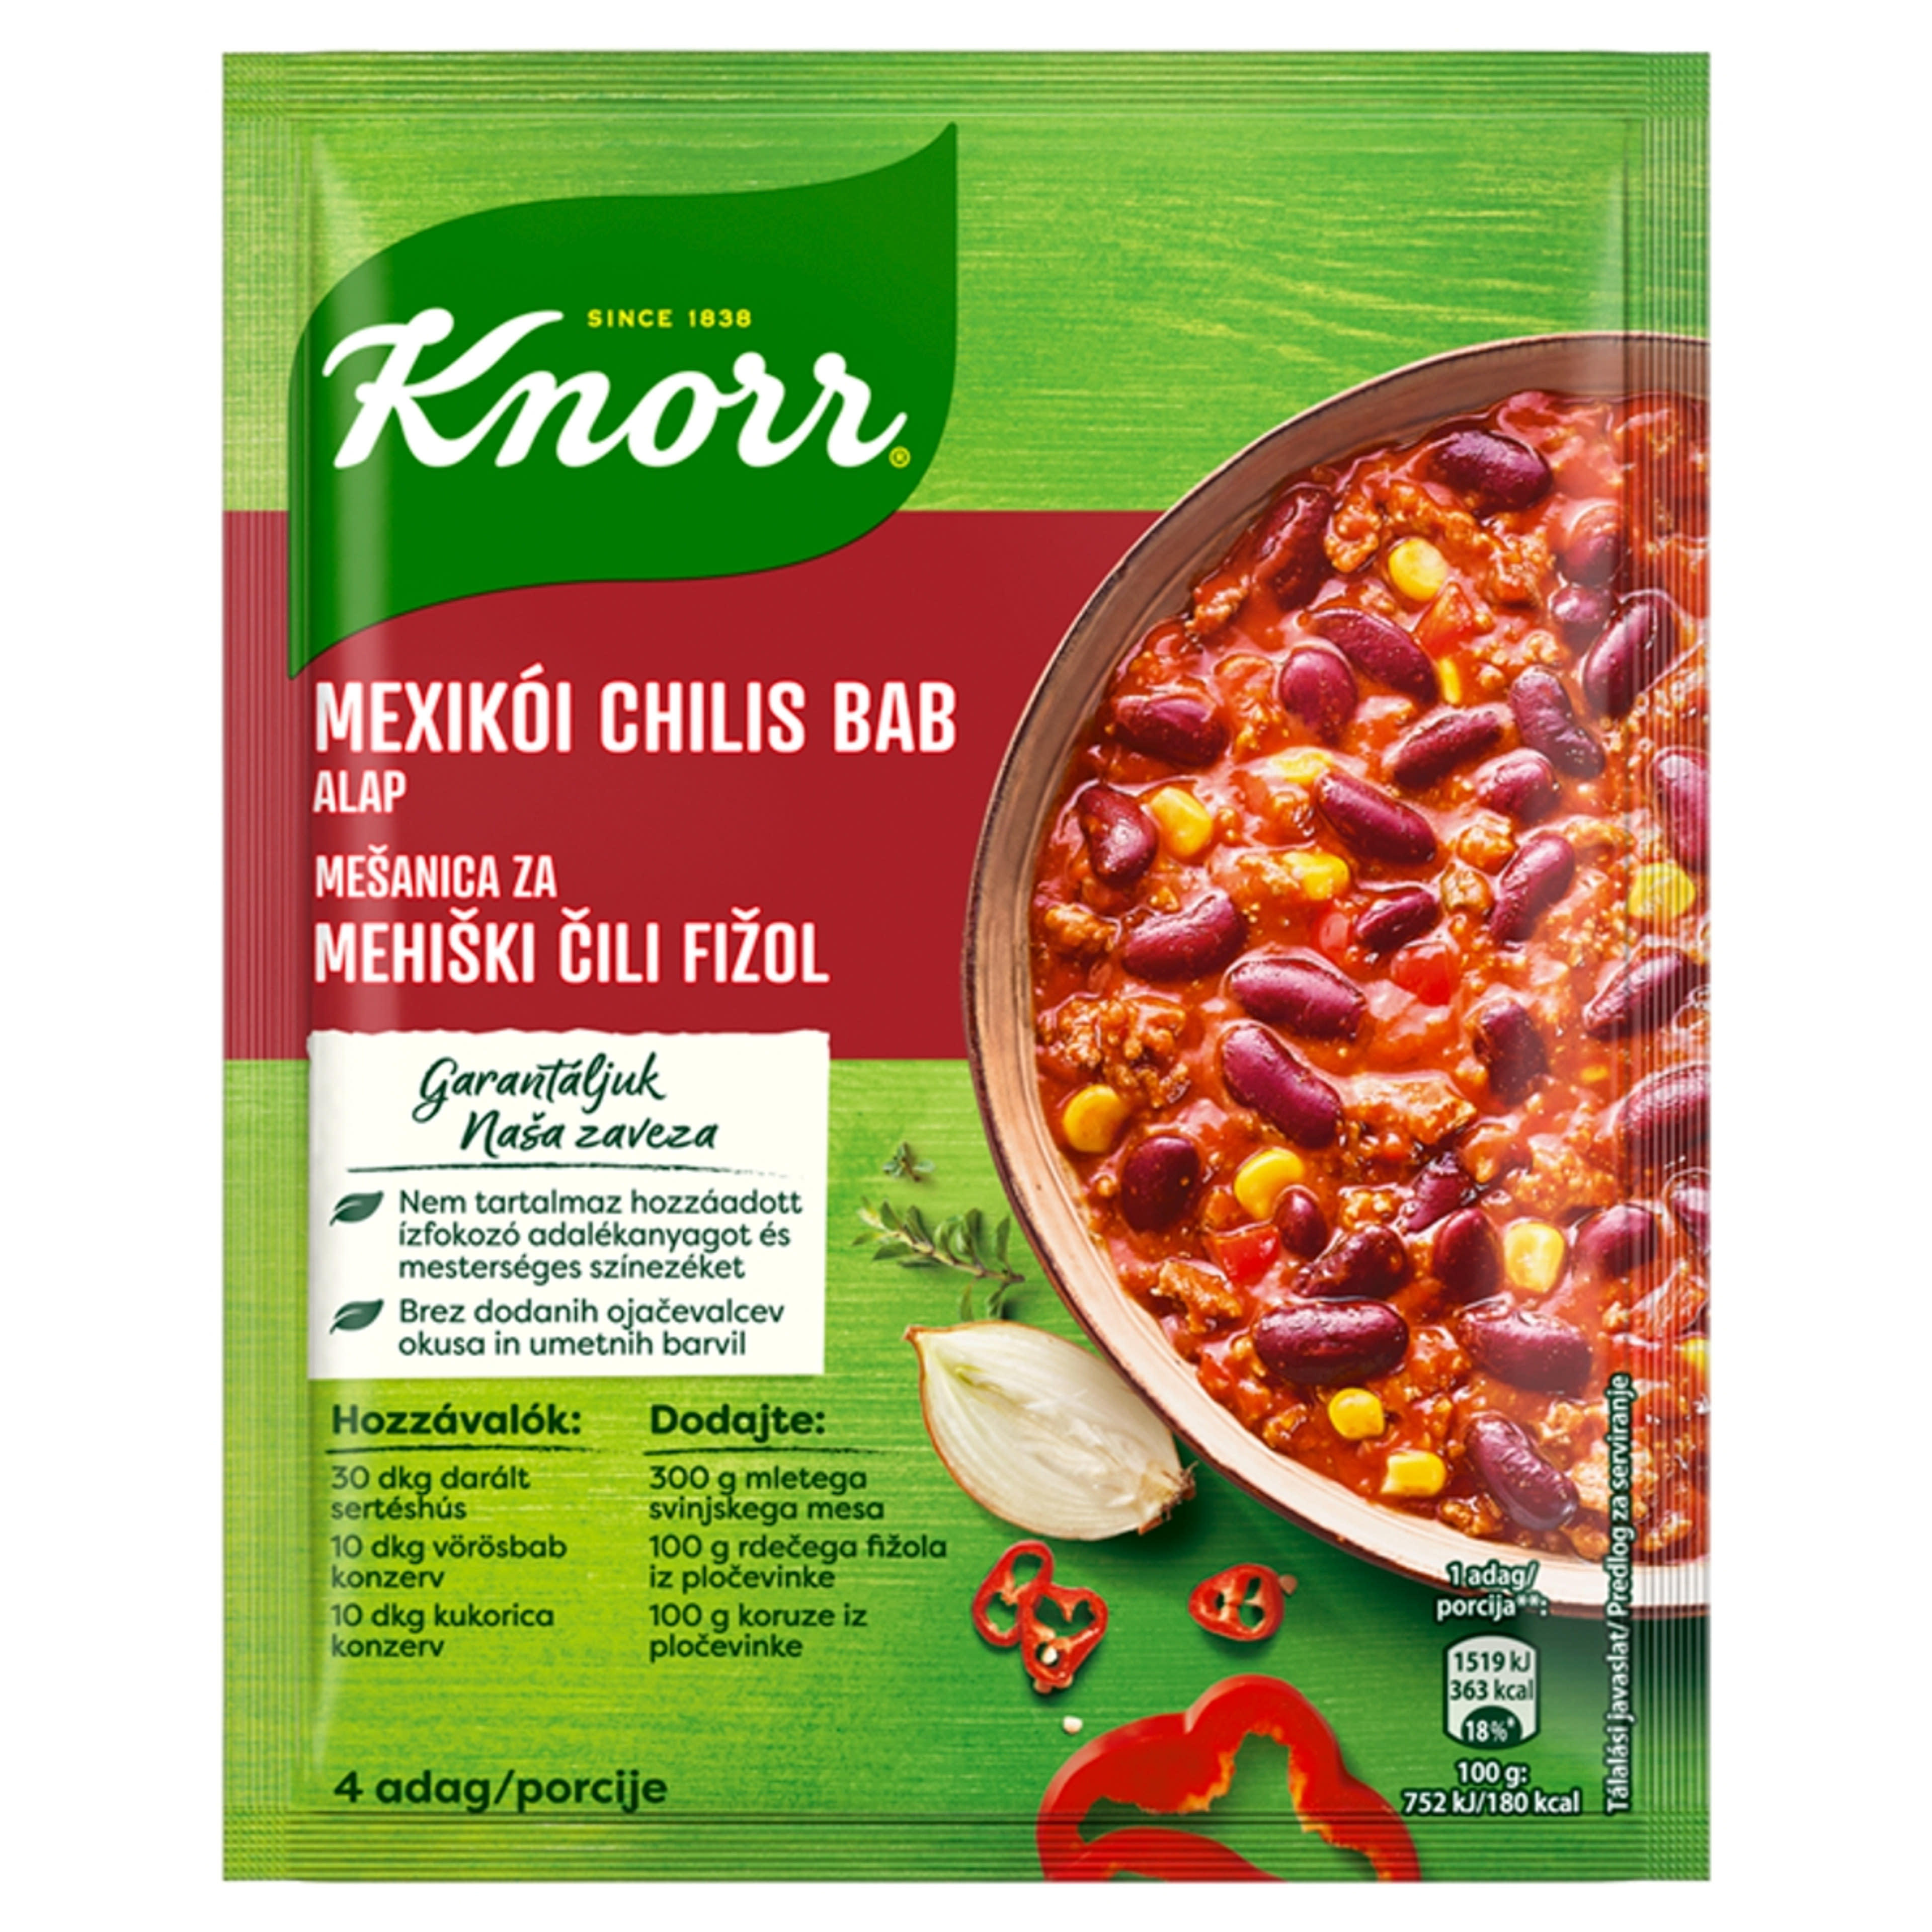 Knorr alap mexikói chilis bab - 50 g